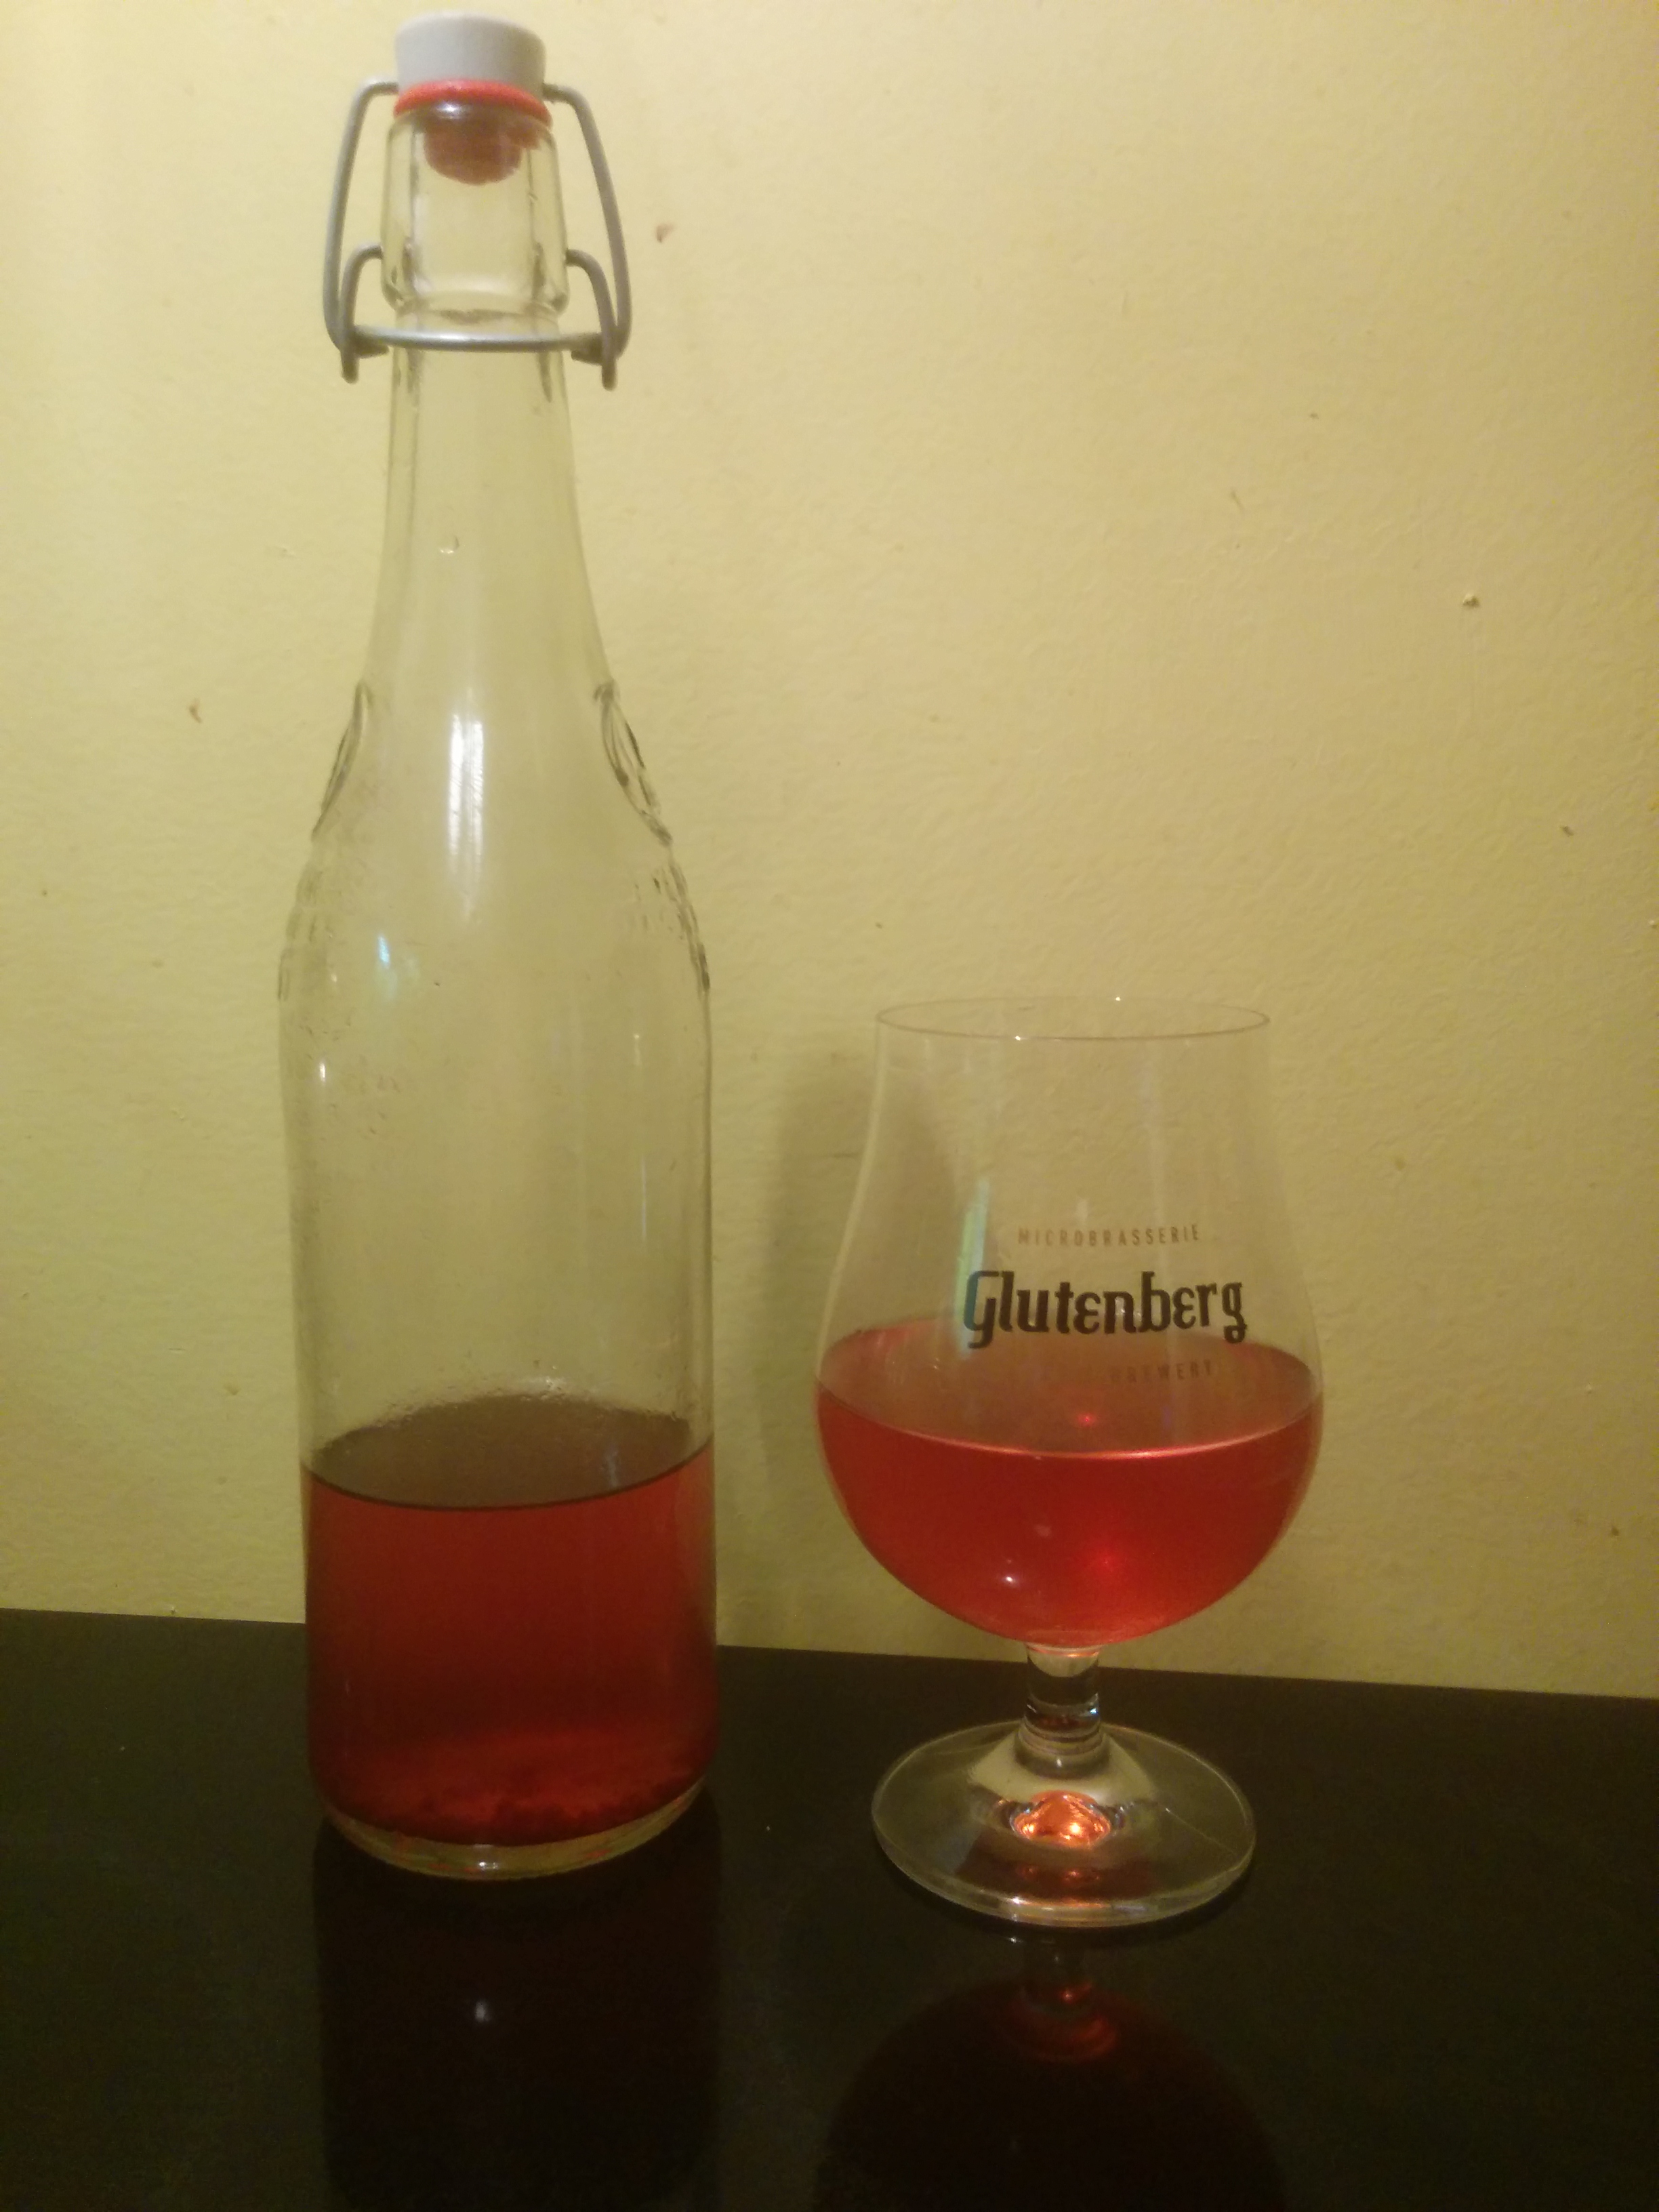 A bottle of homemade pink lemonade